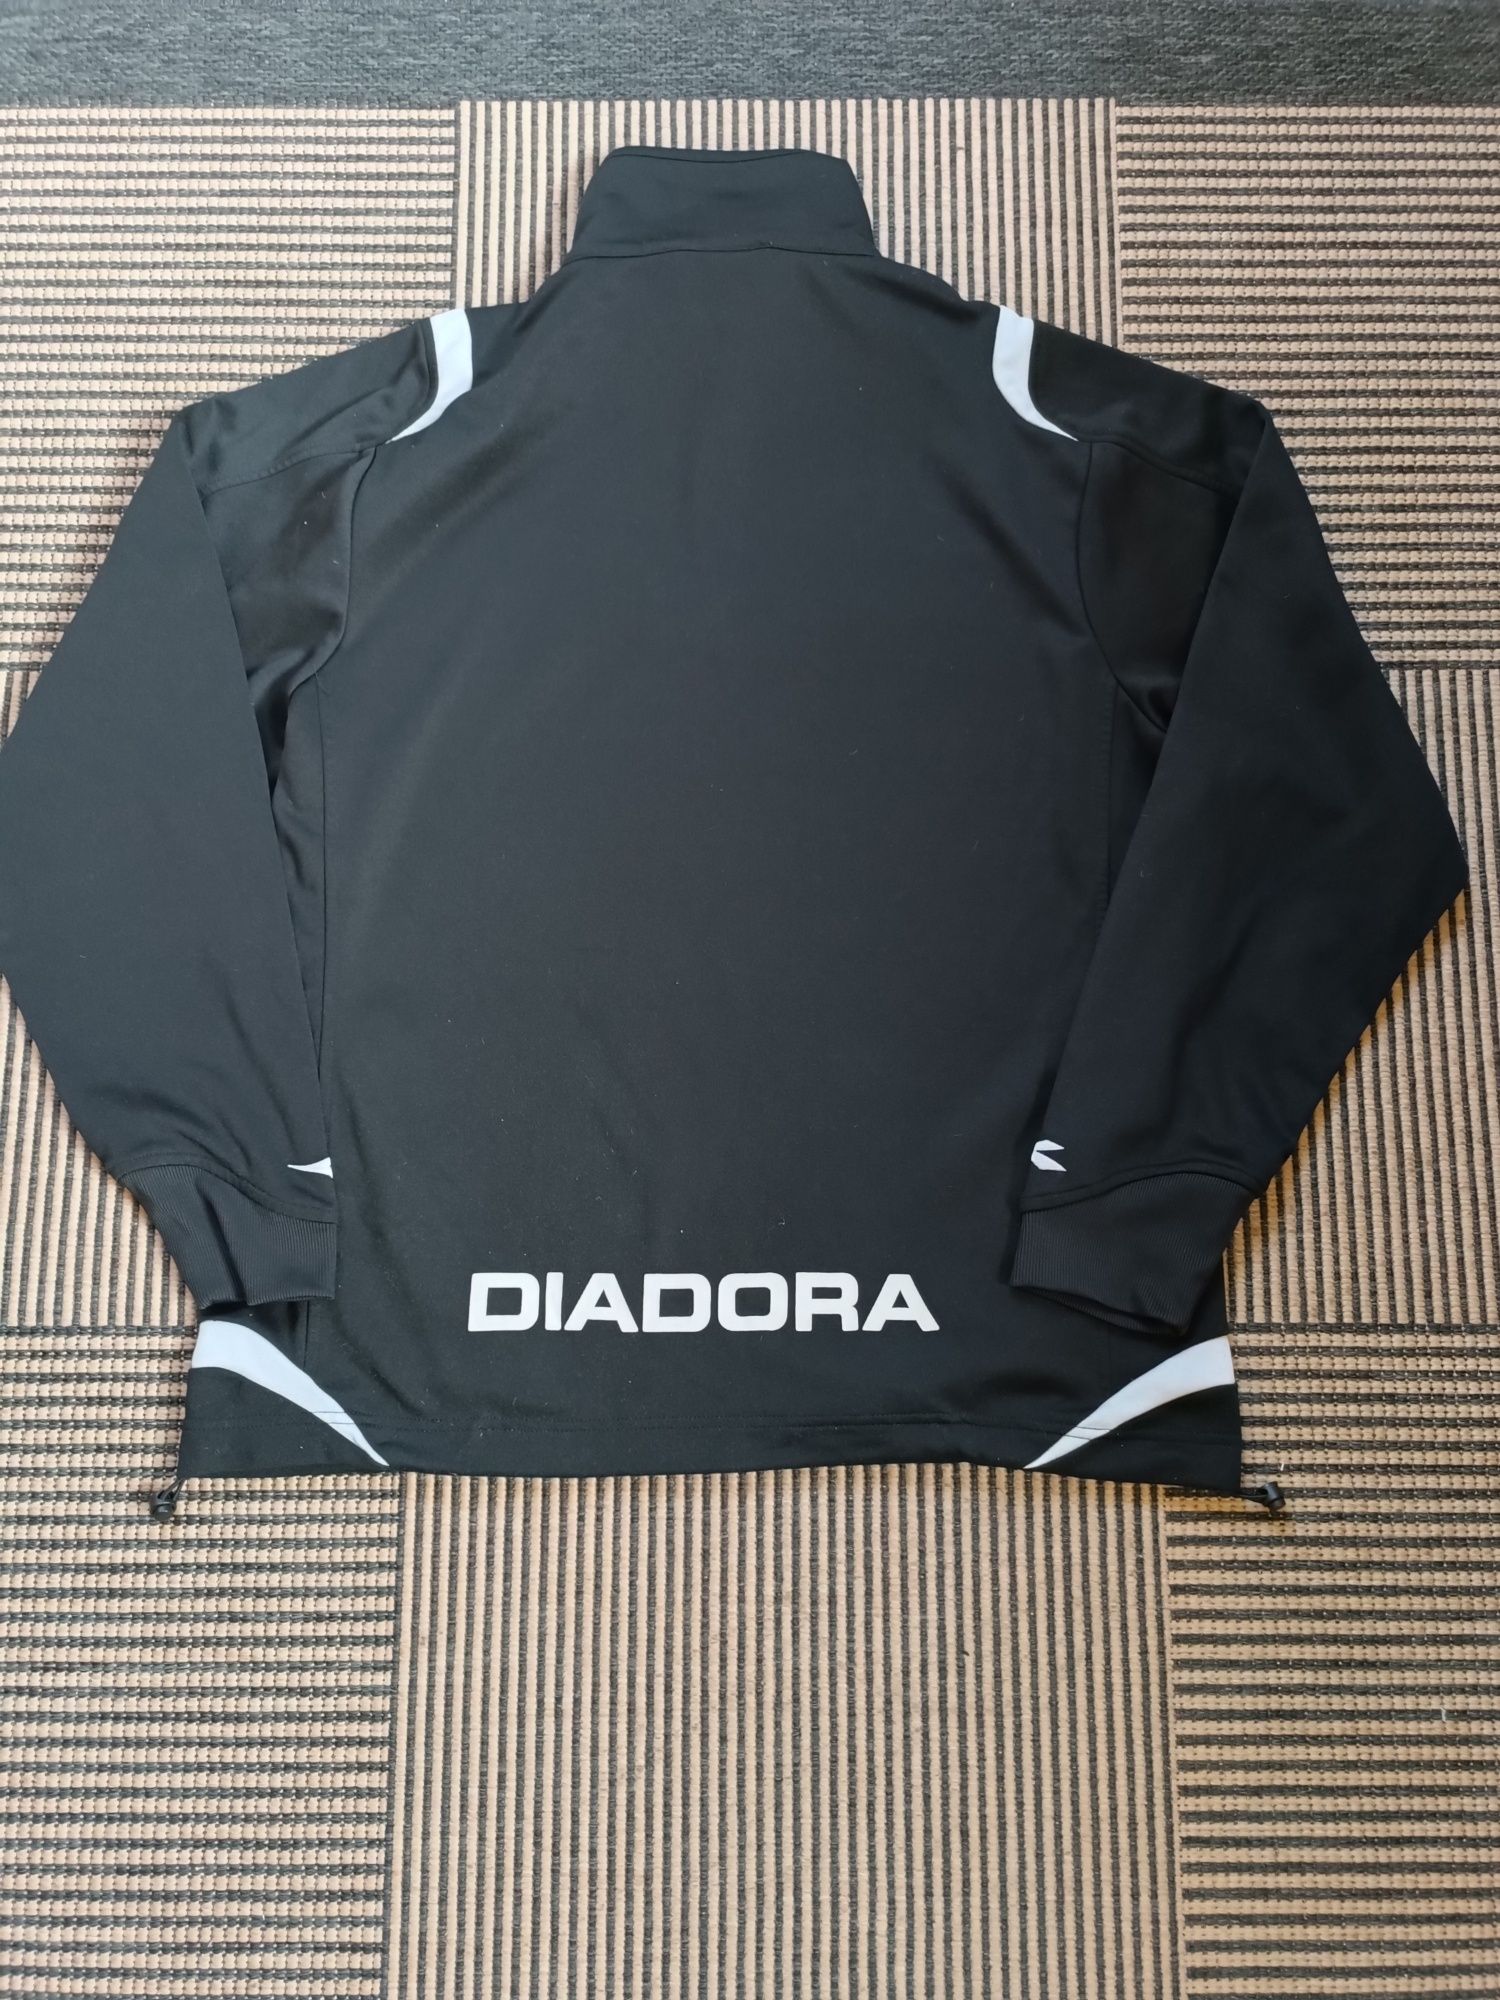 Bluza sportowa męska Diadora XL/XXL